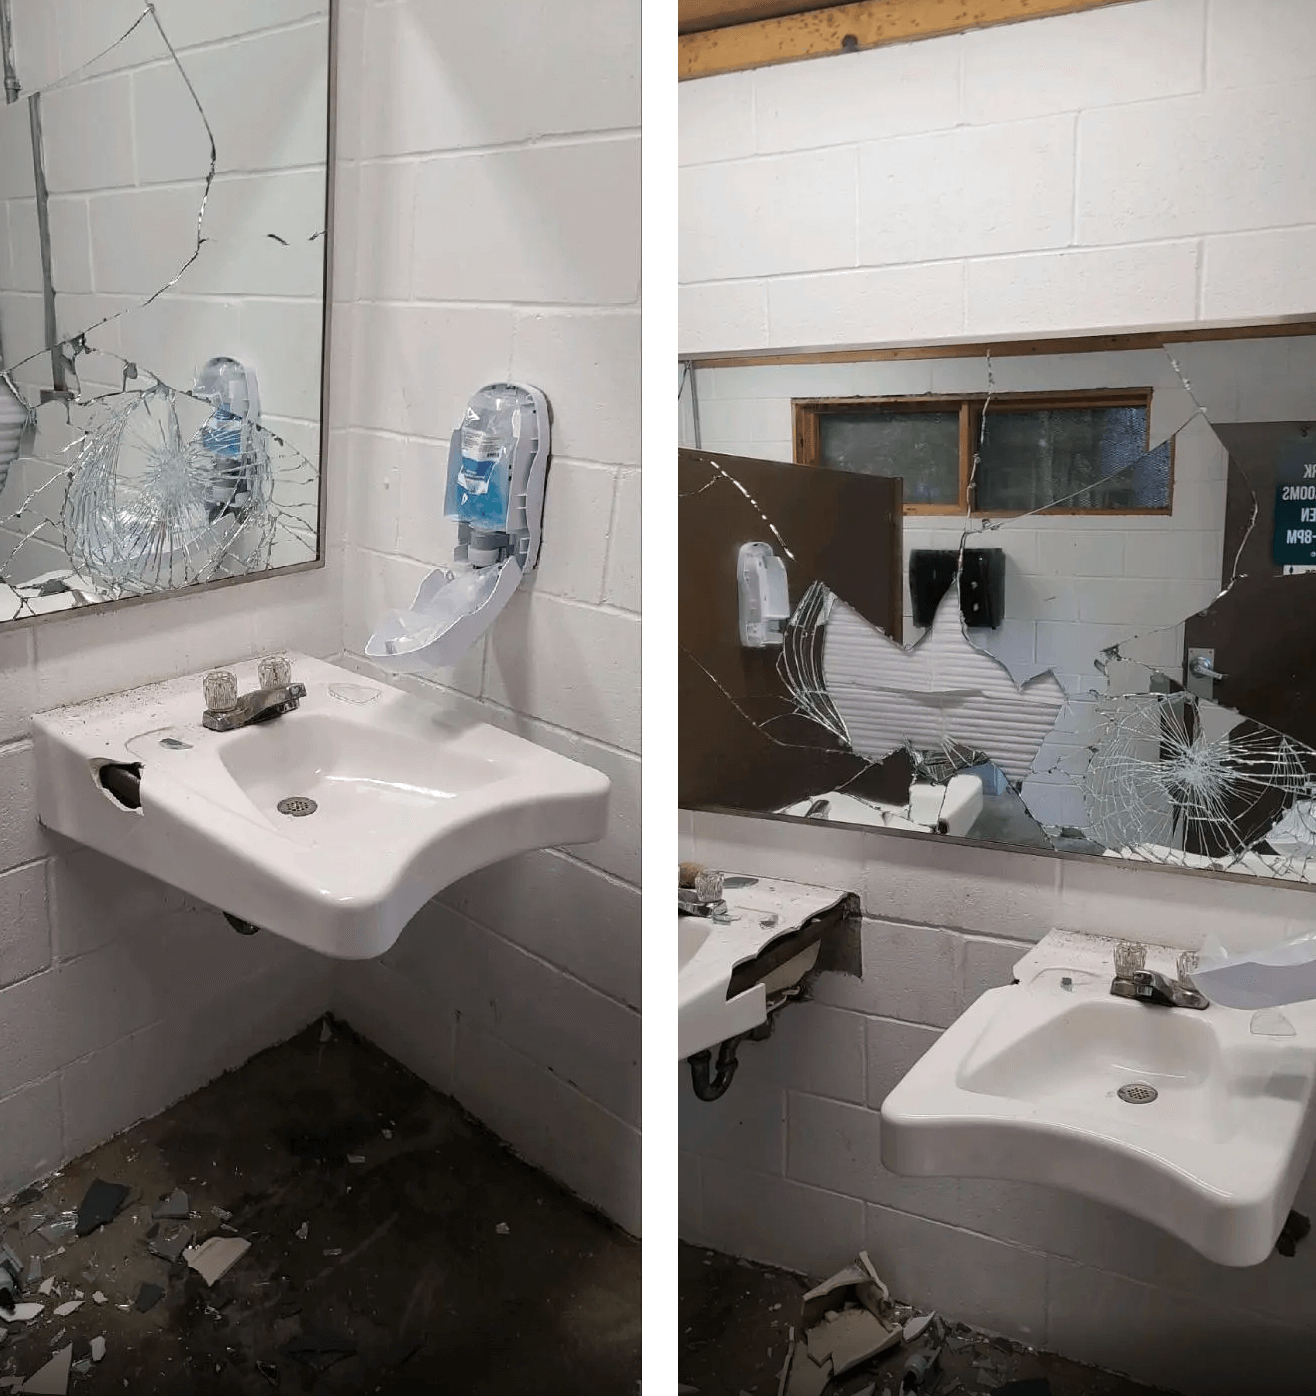 Vandalism Strikes Malta Community Park's Woman's Restroom